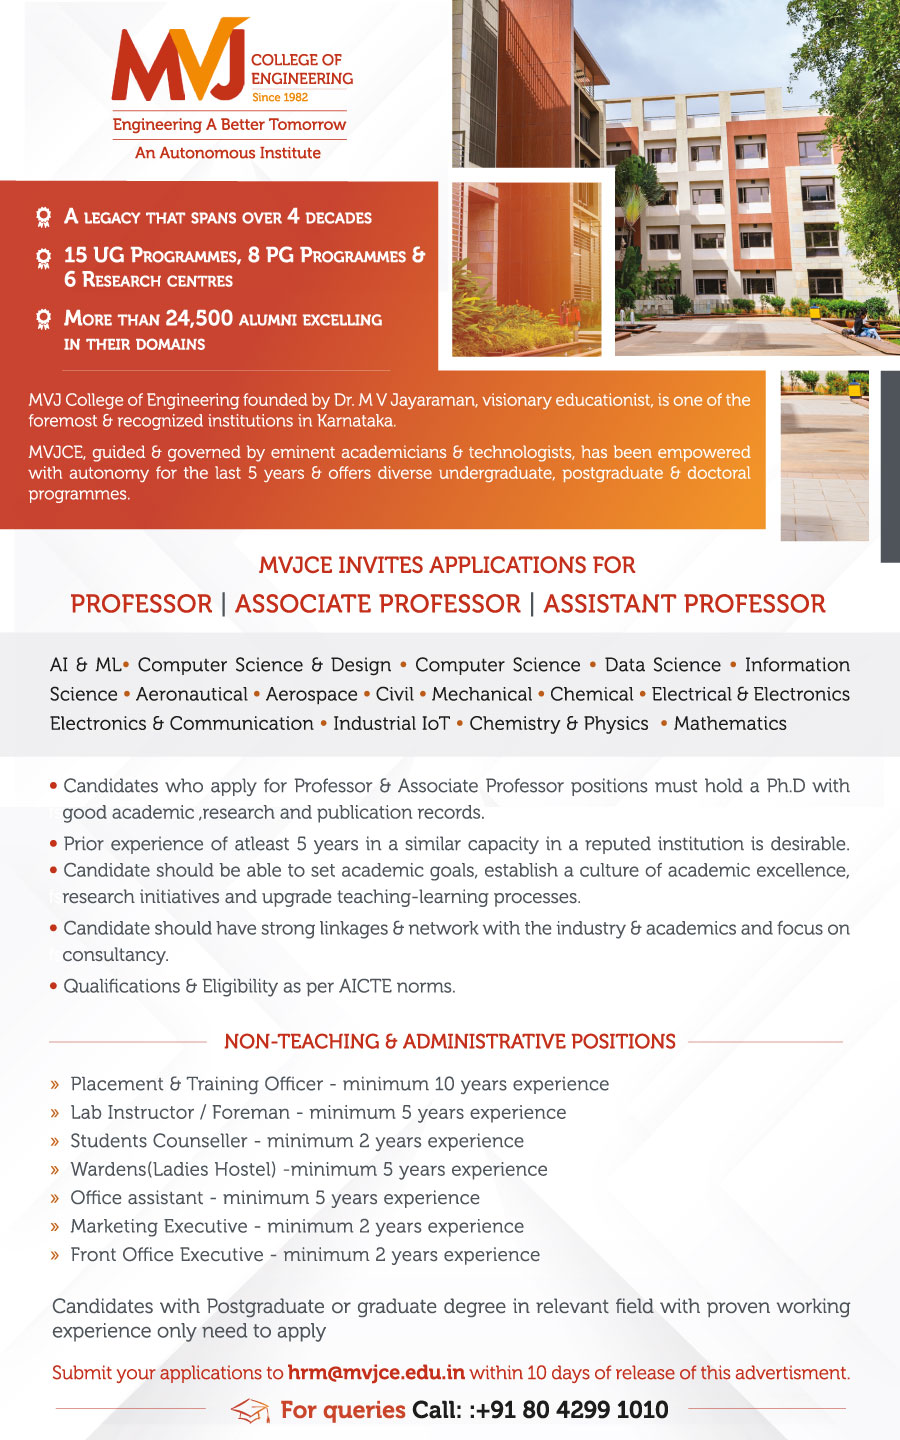 MVJCE Invites applications for Academic Positions